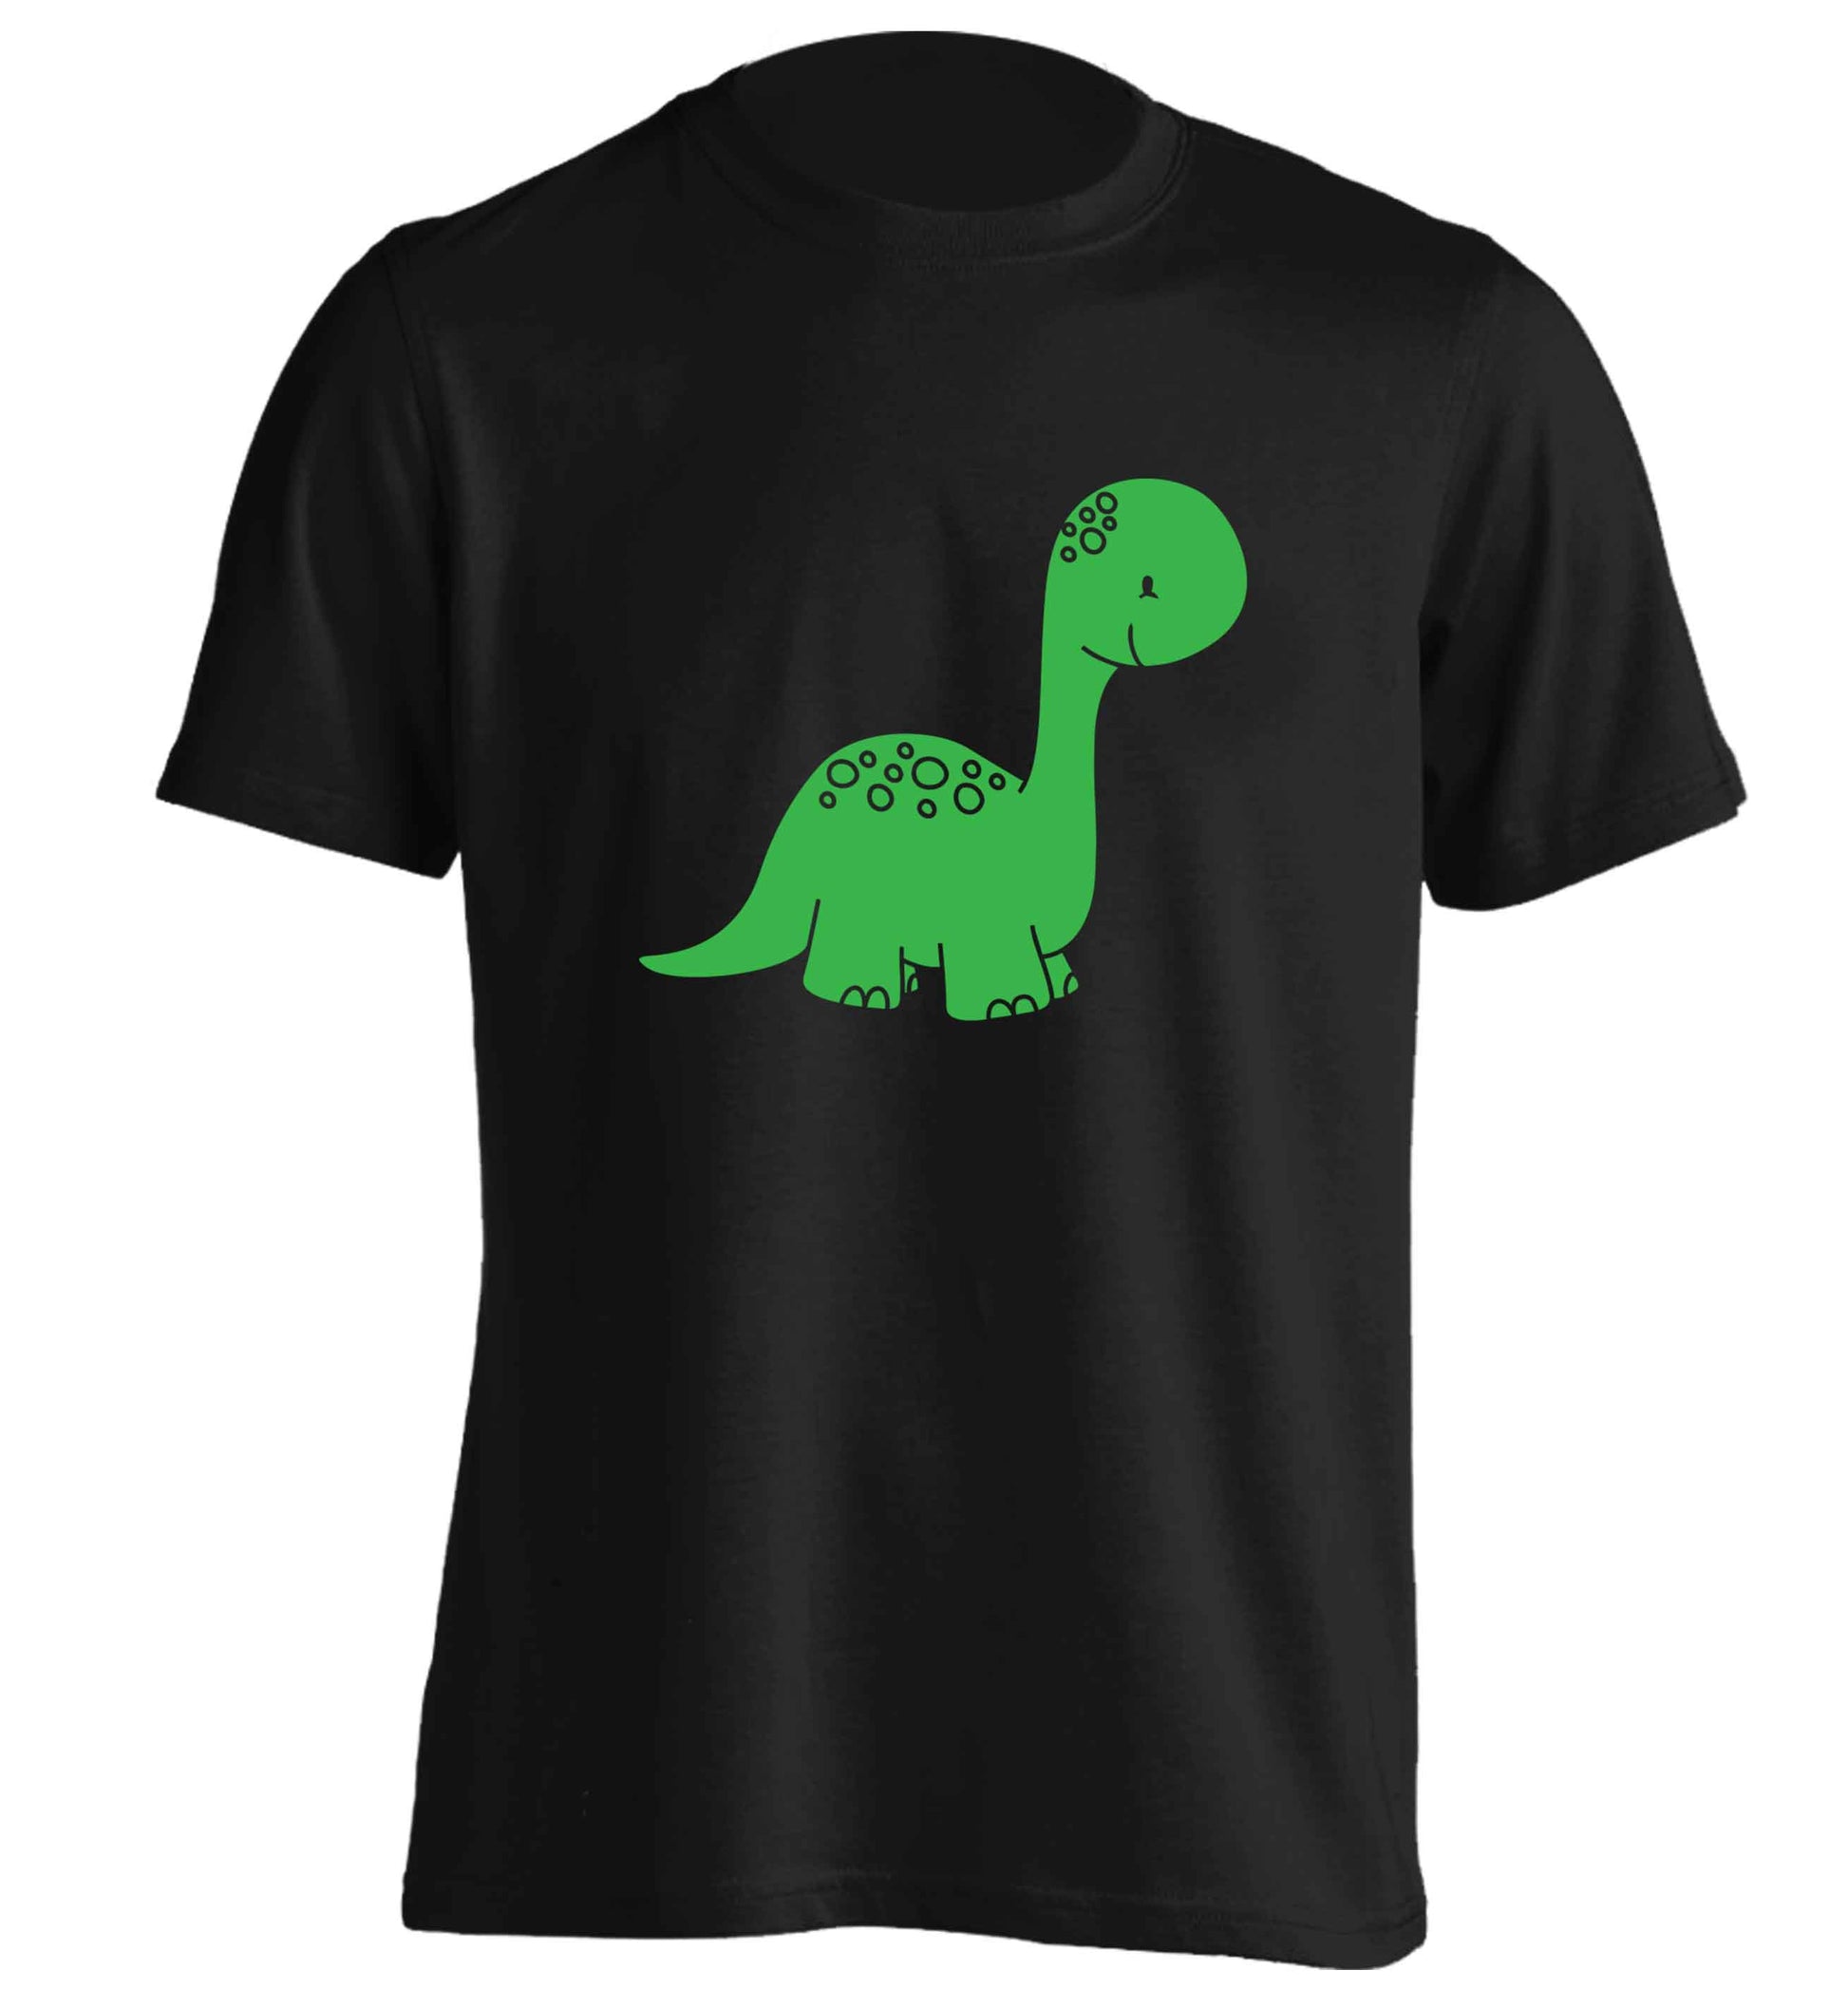 Dinosaur illustration adults unisex black Tshirt 2XL